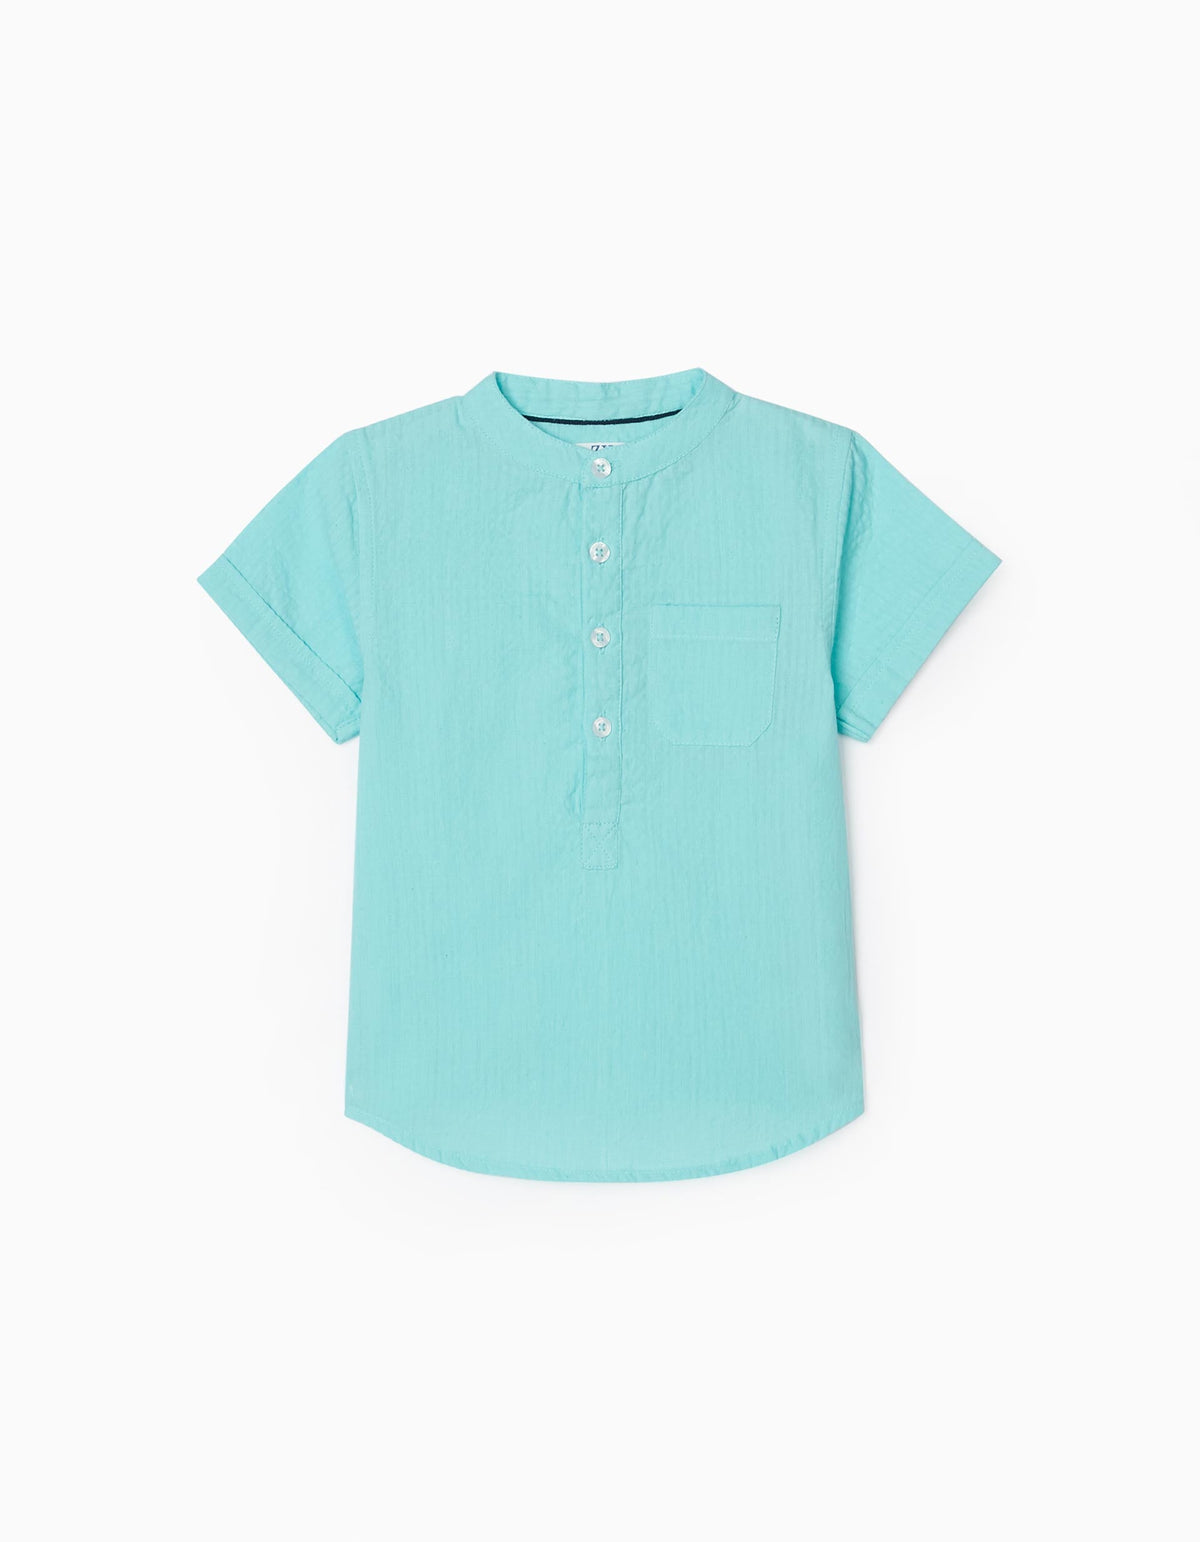 Zippy Baby Boy Aqua Green Textured Short-Sleeved Shirt